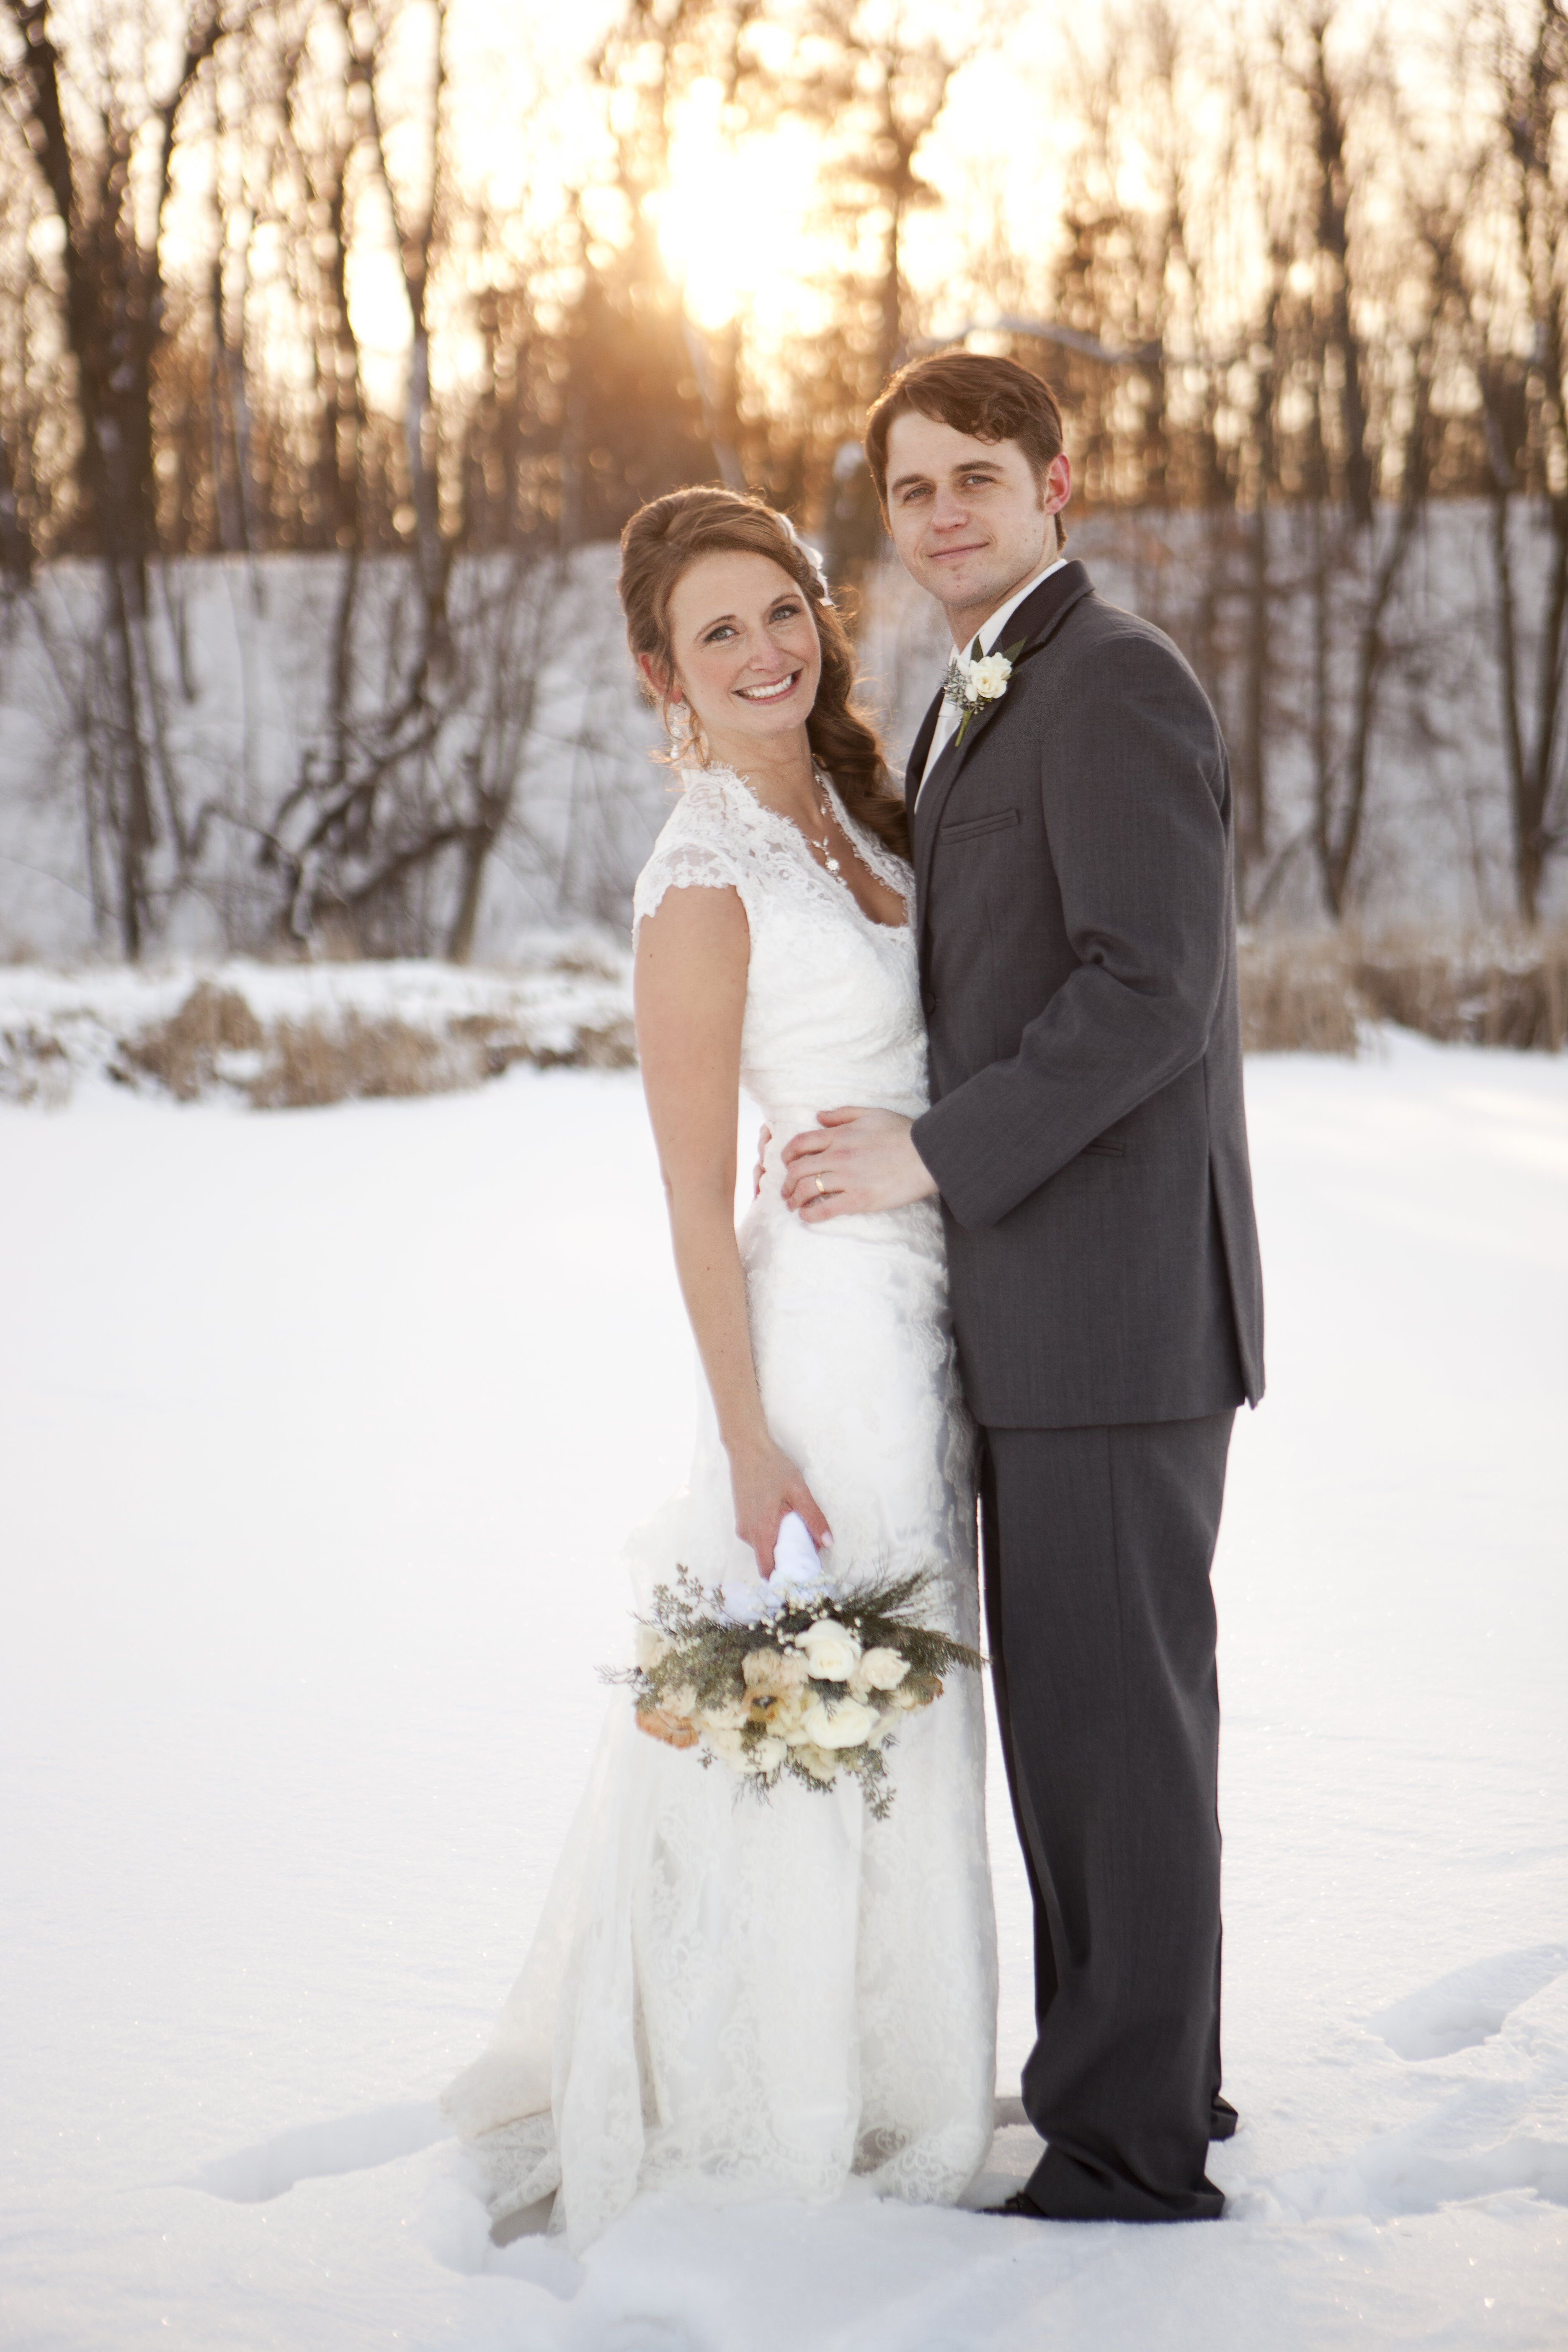 A Rustic Winter Wedding in Maple Grove, MN